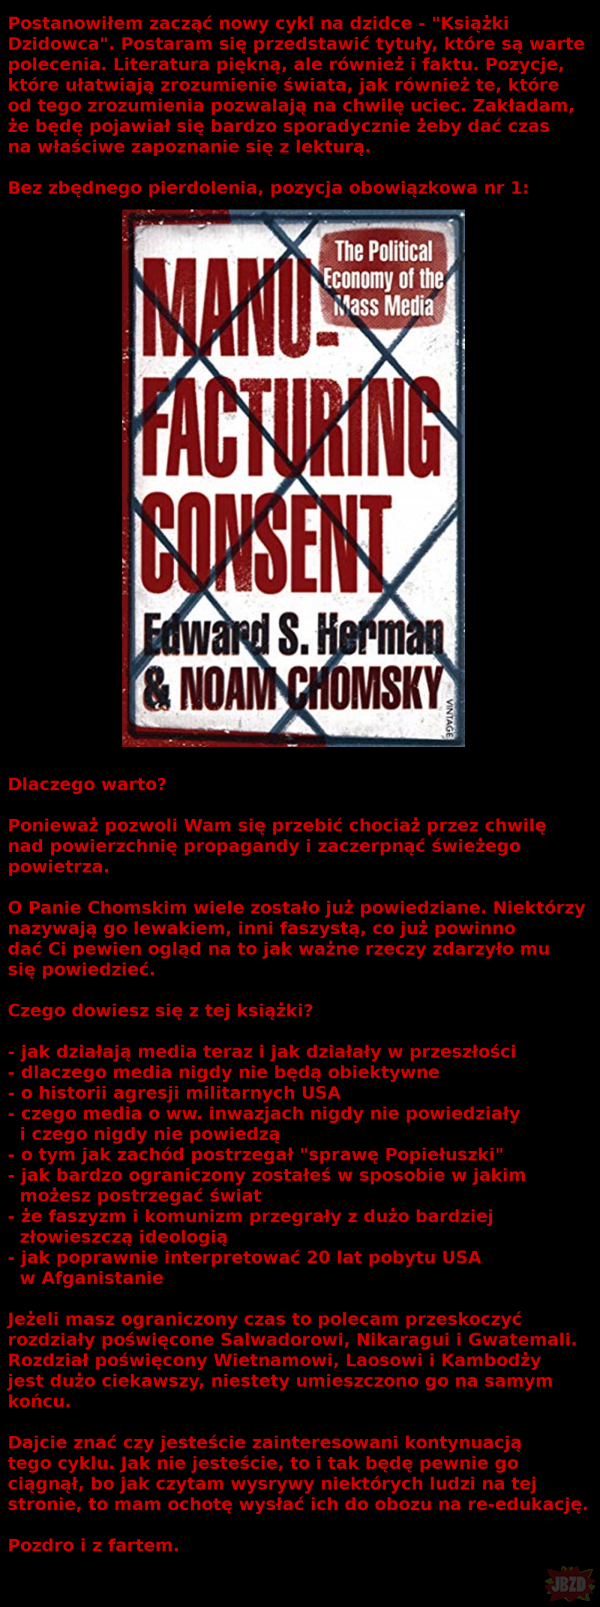 Książki Dzidowca I - "Manufacturing Consent", E. S. Herman, N. Chomsky